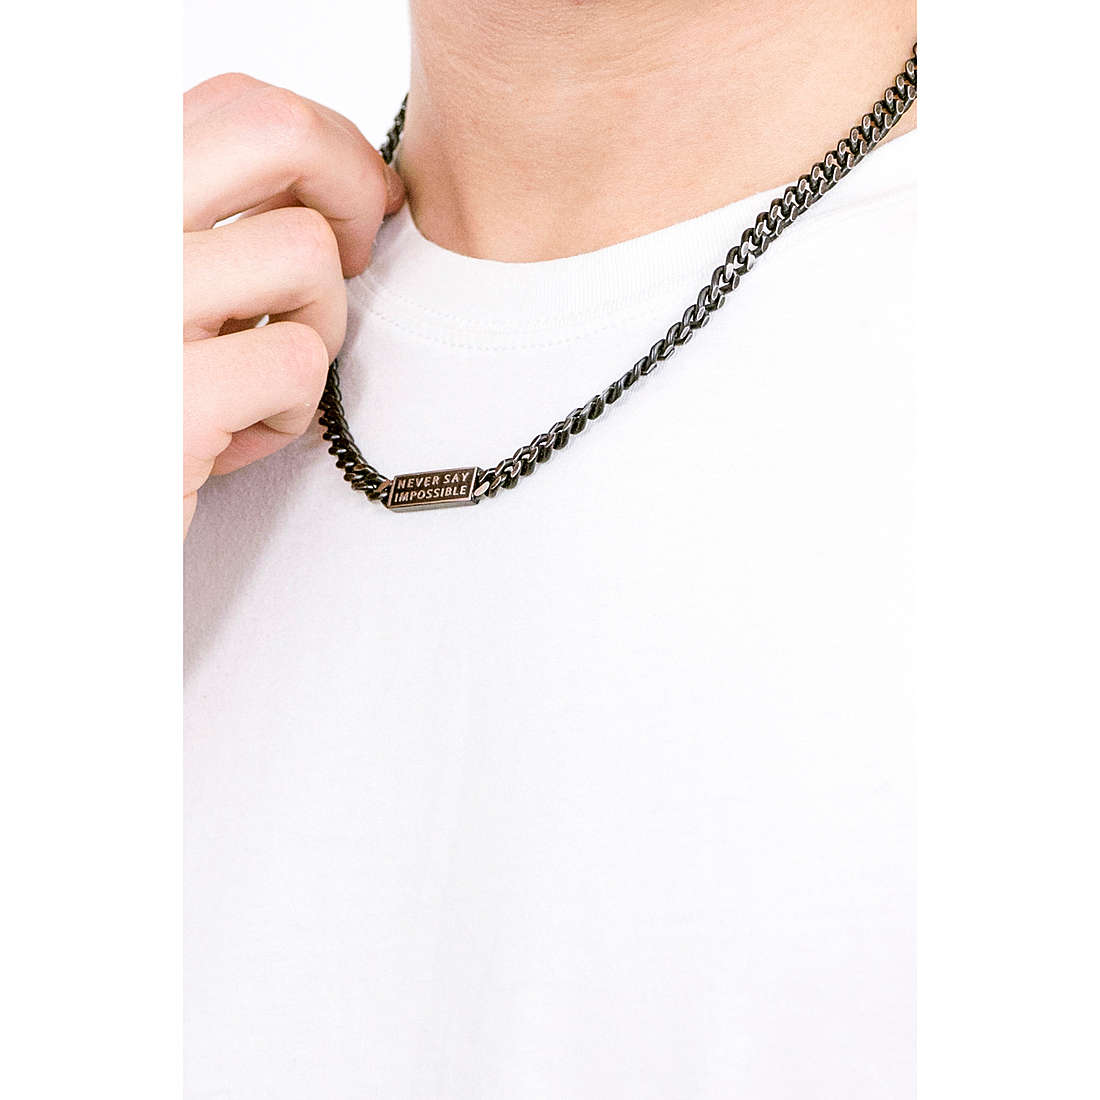 Kidult necklaces Philosophy man 751192 wearing